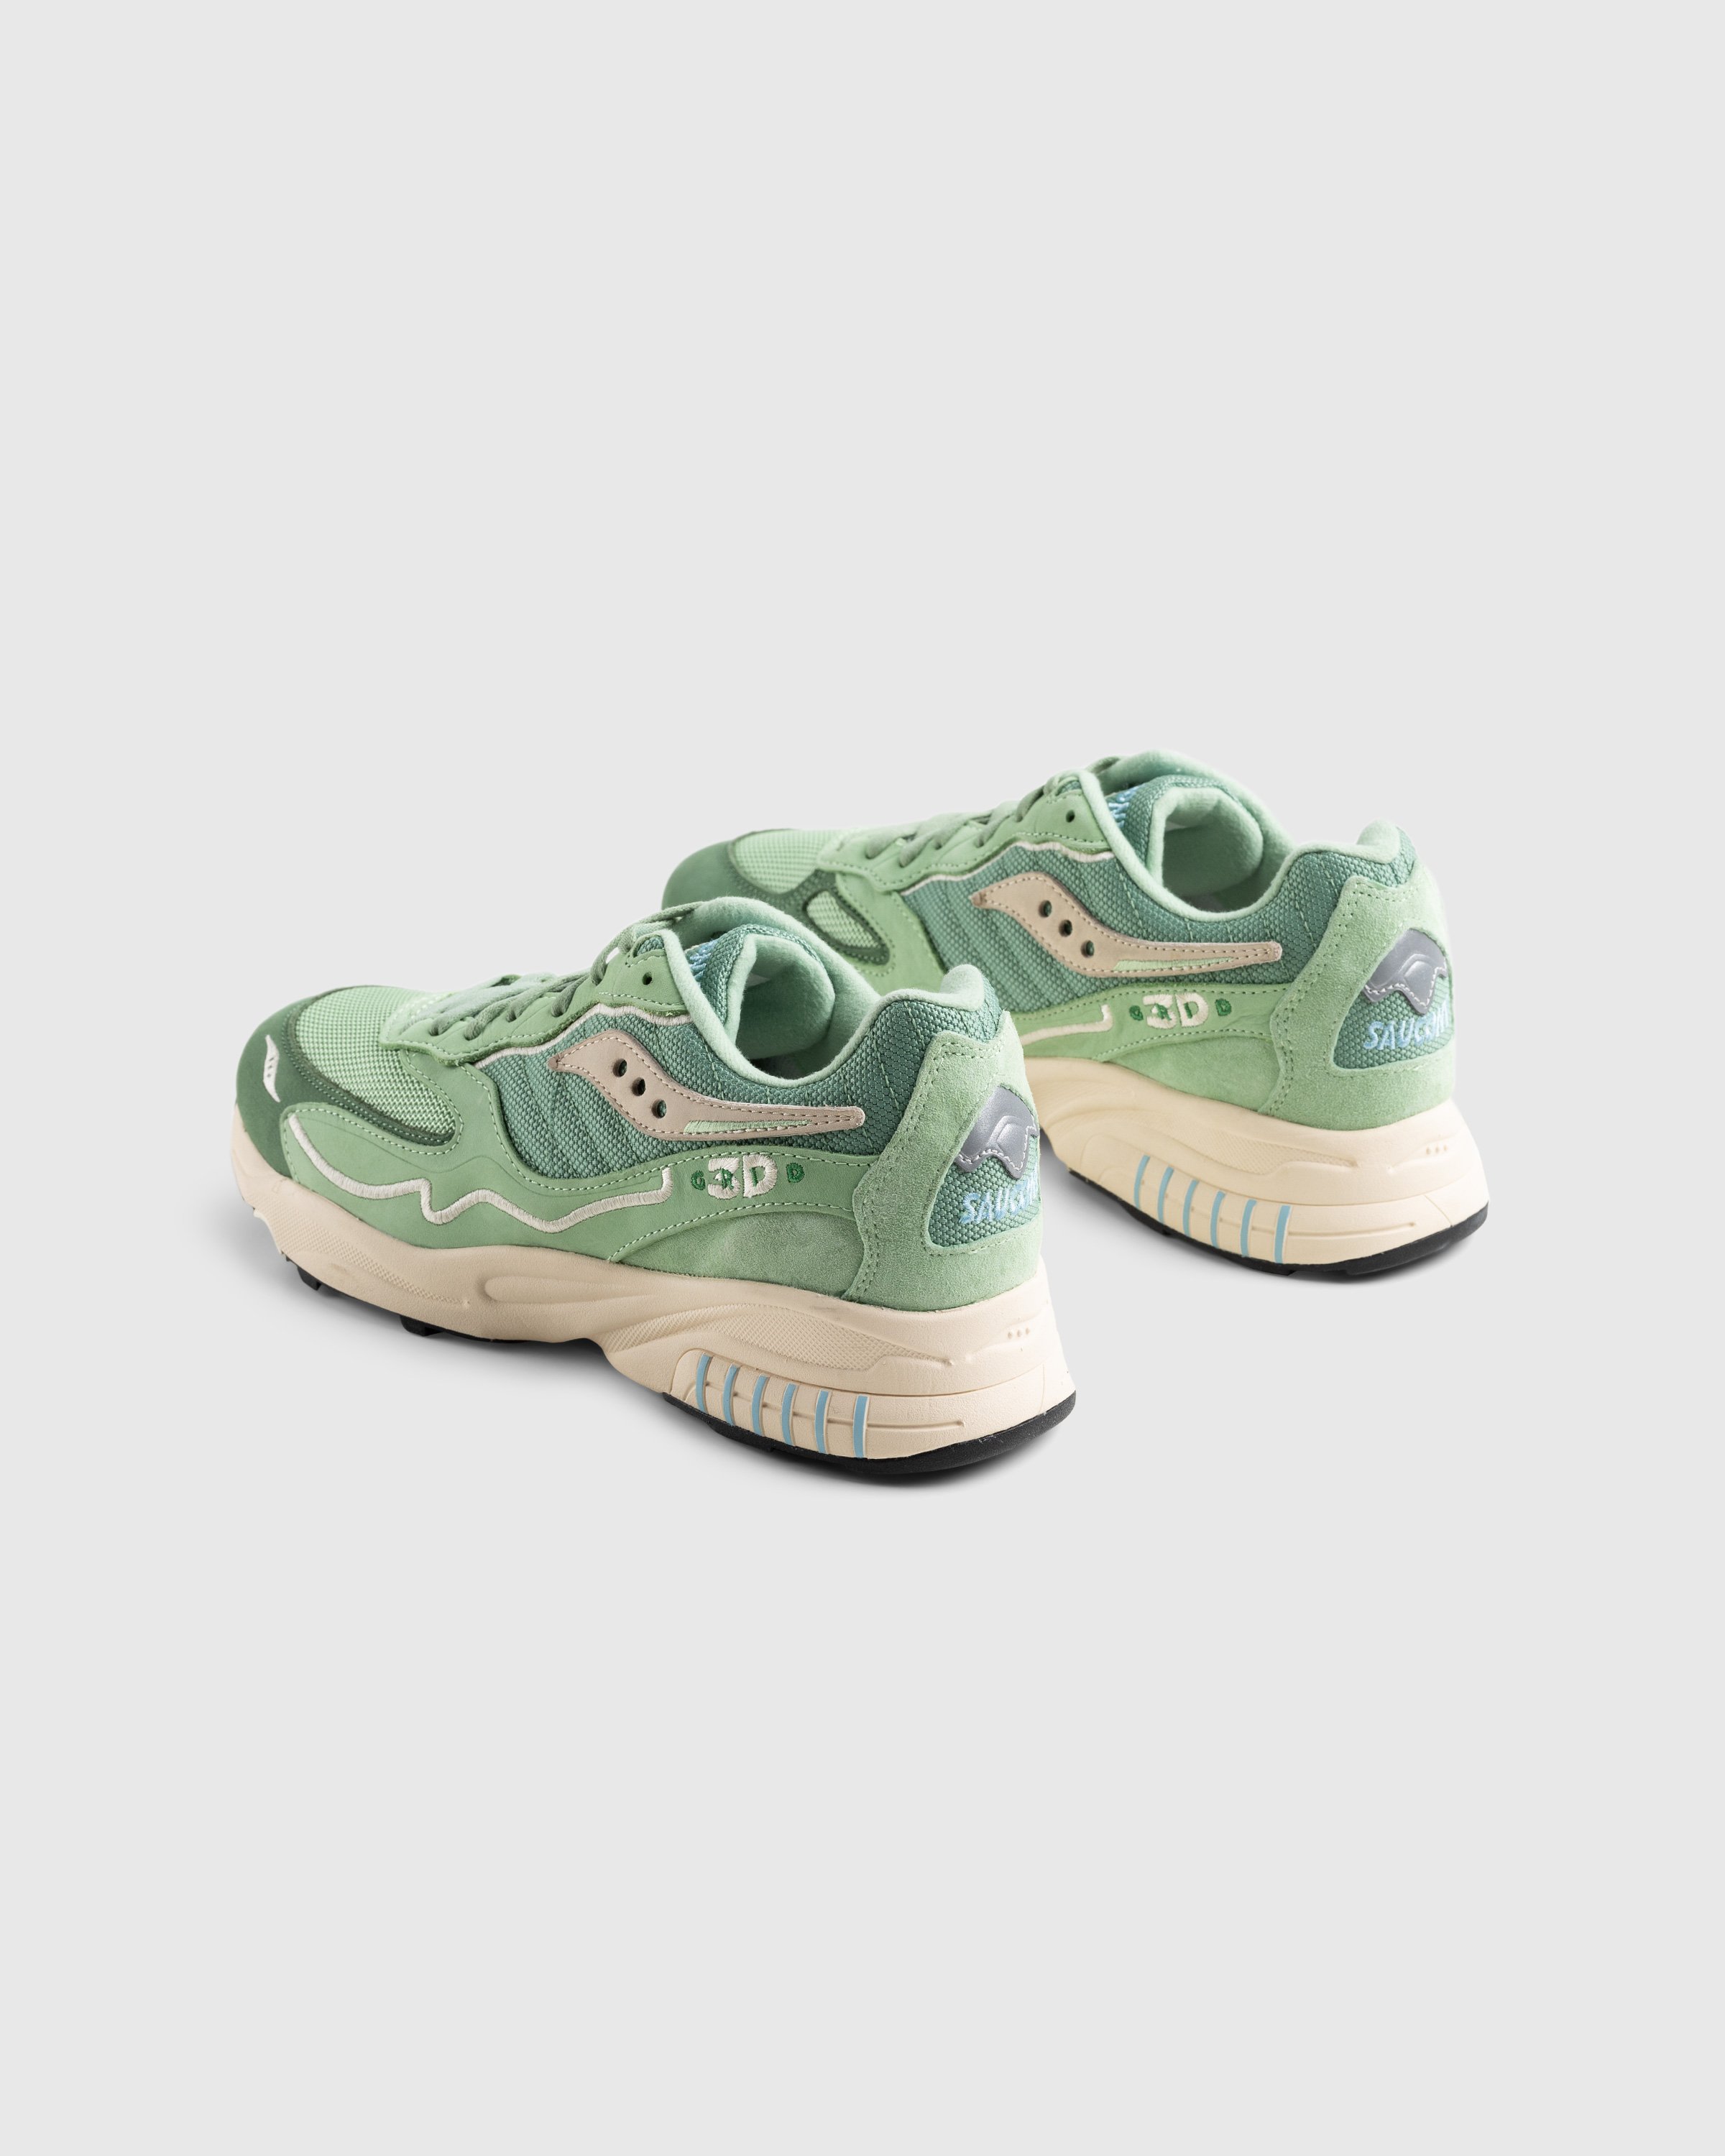 Saucony - 3D Grid Hurricane Green/Cream - Footwear - Green - Image 5